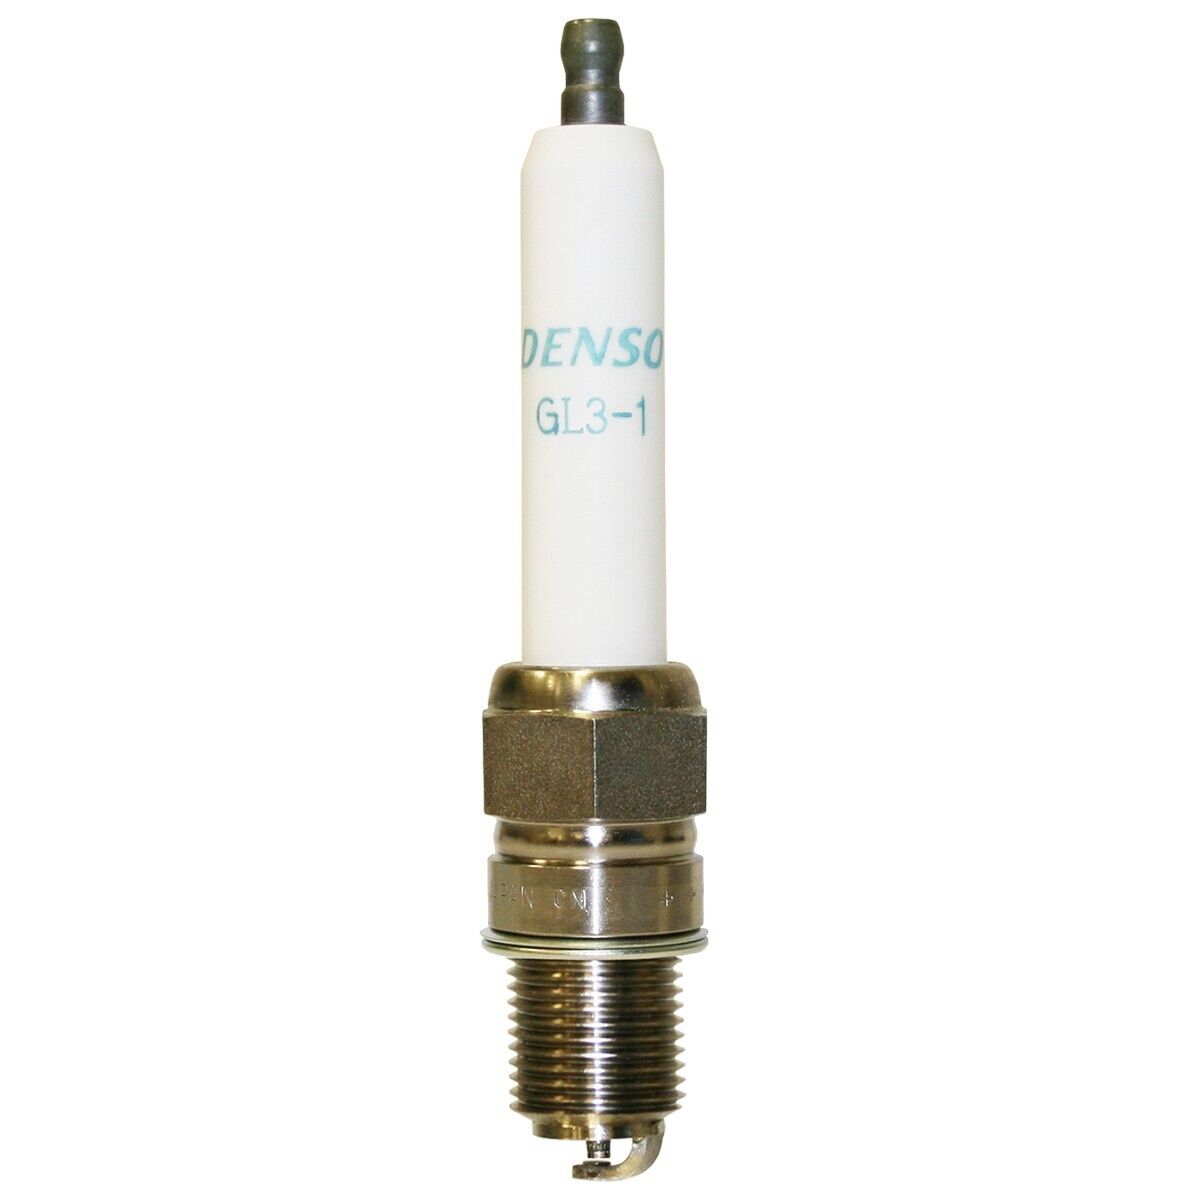 Denso Spark Plug GL3-1  #6118 Industrial  Iridium Saver-Performer 1pc